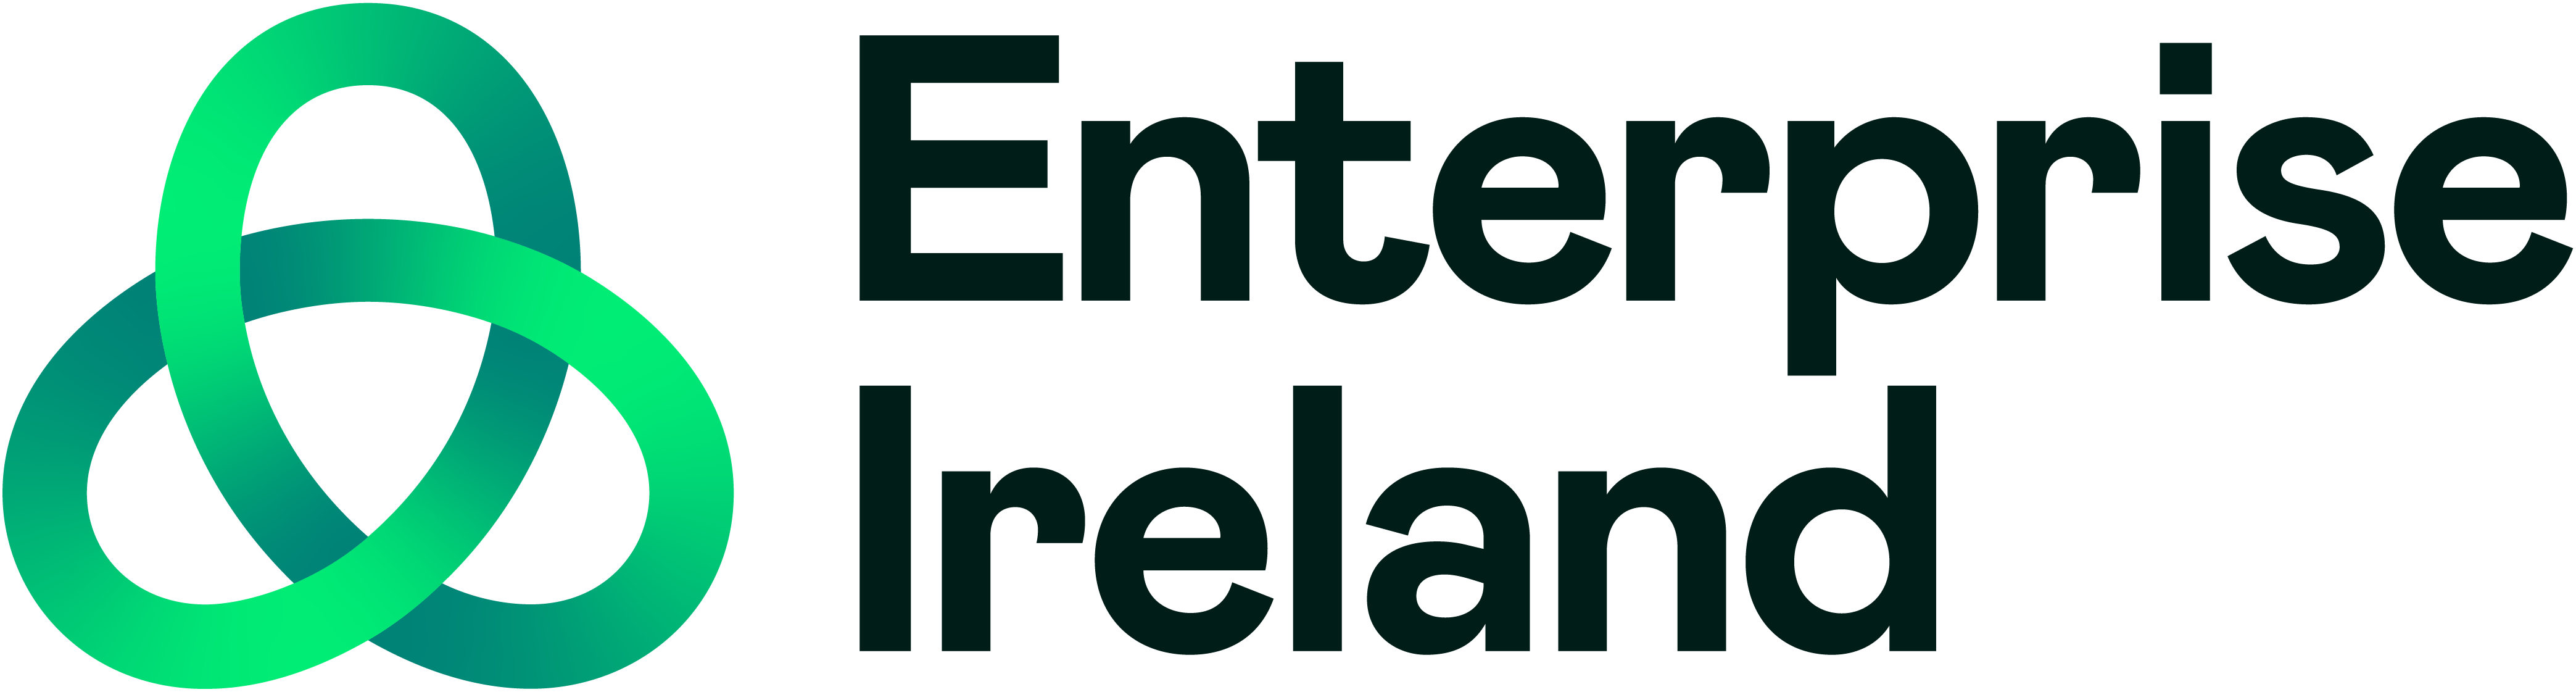 Enterprise-Ireland-Logo-1